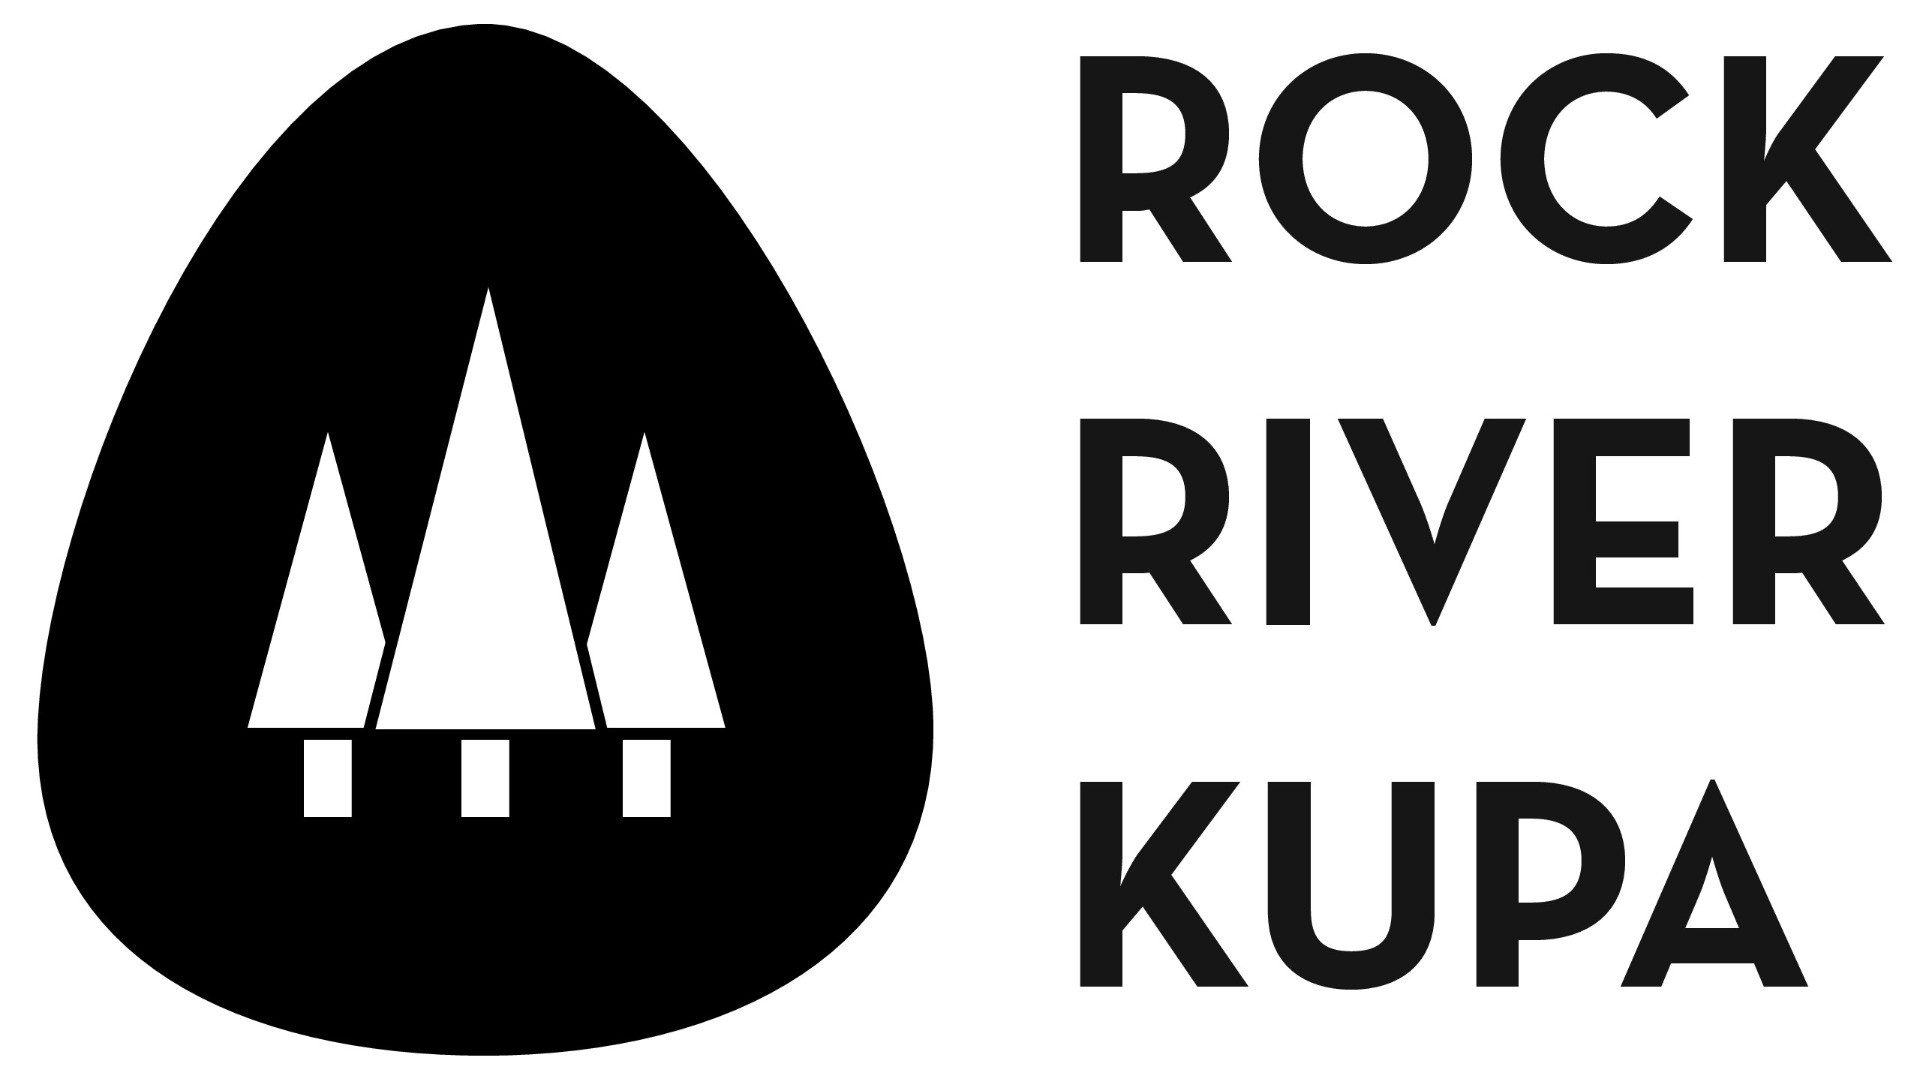 ROCK RIVER KUPA (family resort)